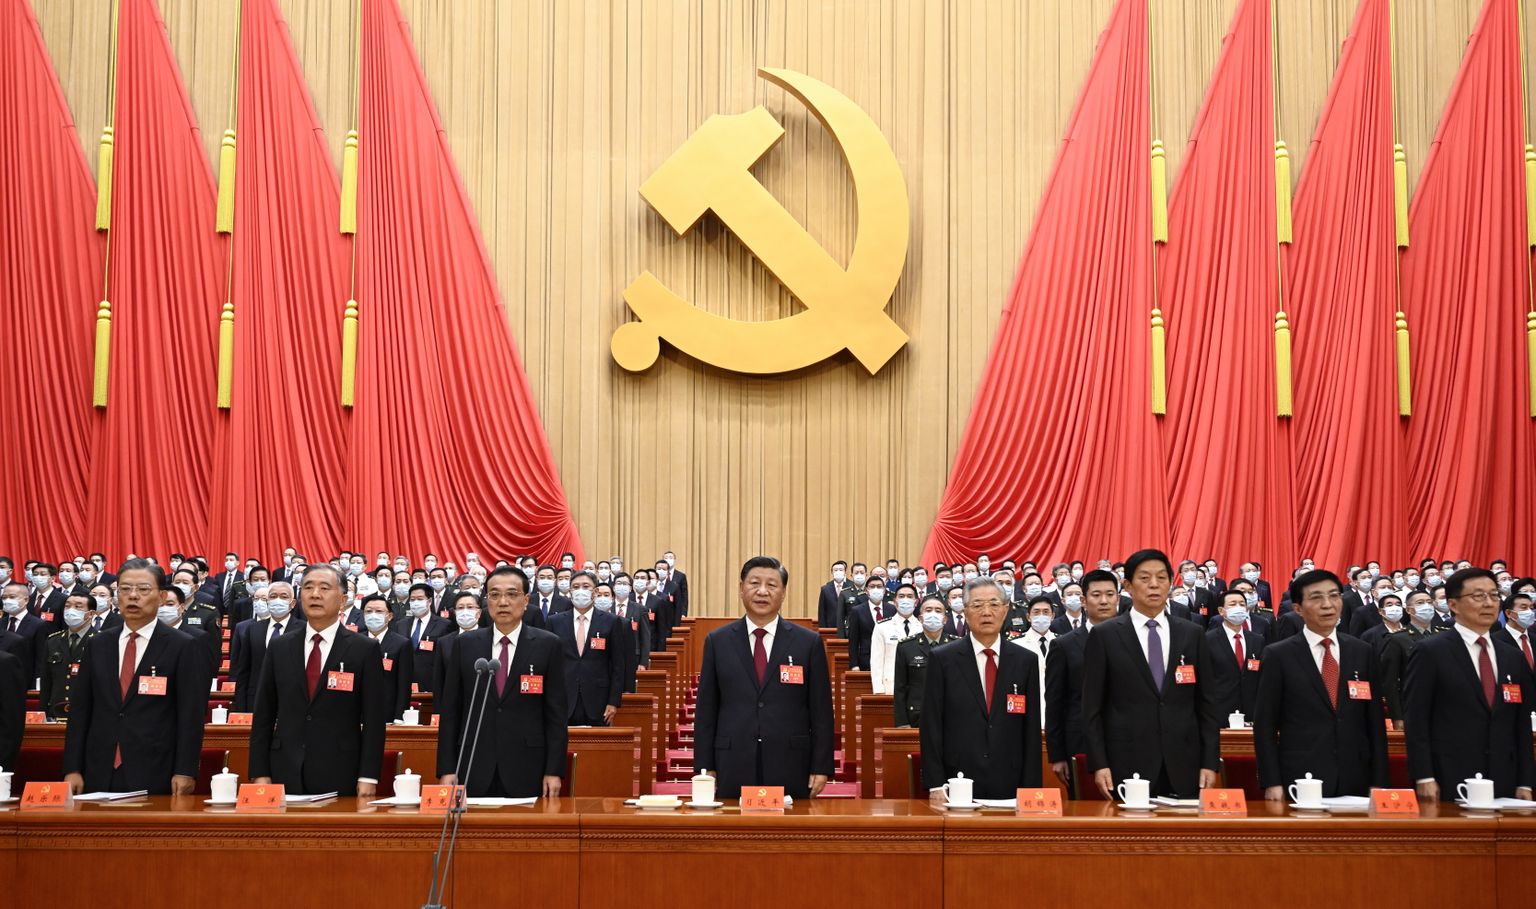 Hiina president Xi Jinping kommunistliku partei 20. kongressi avamisel.